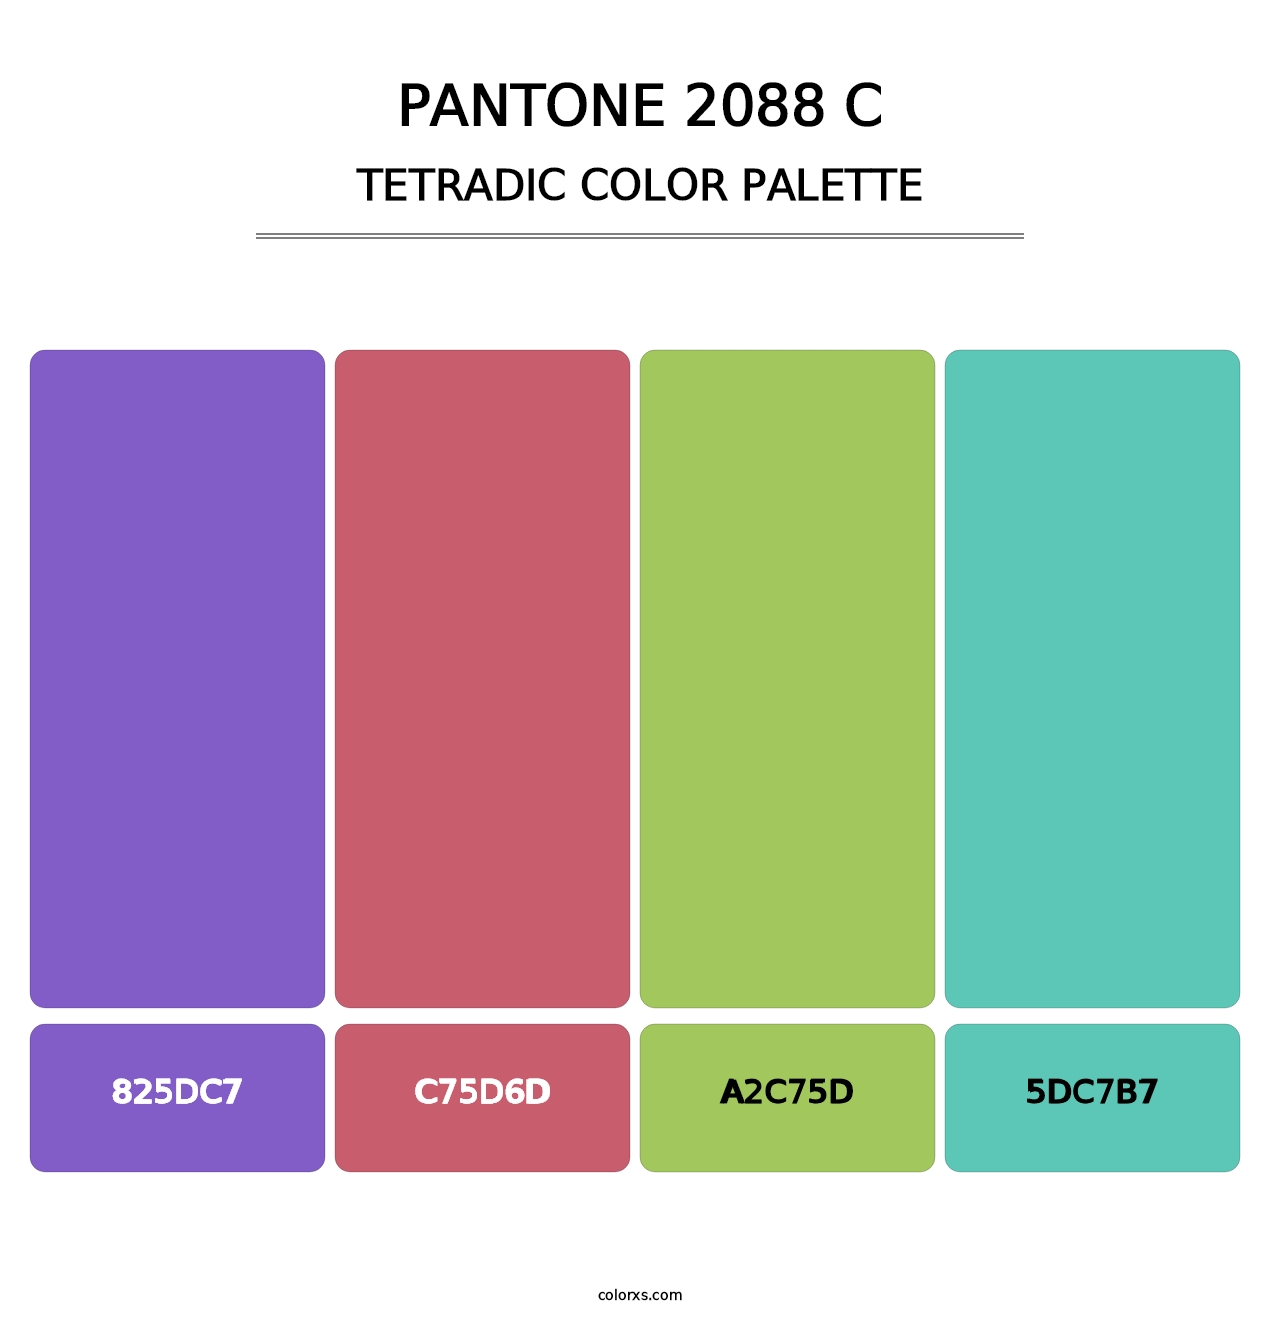 PANTONE 2088 C - Tetradic Color Palette